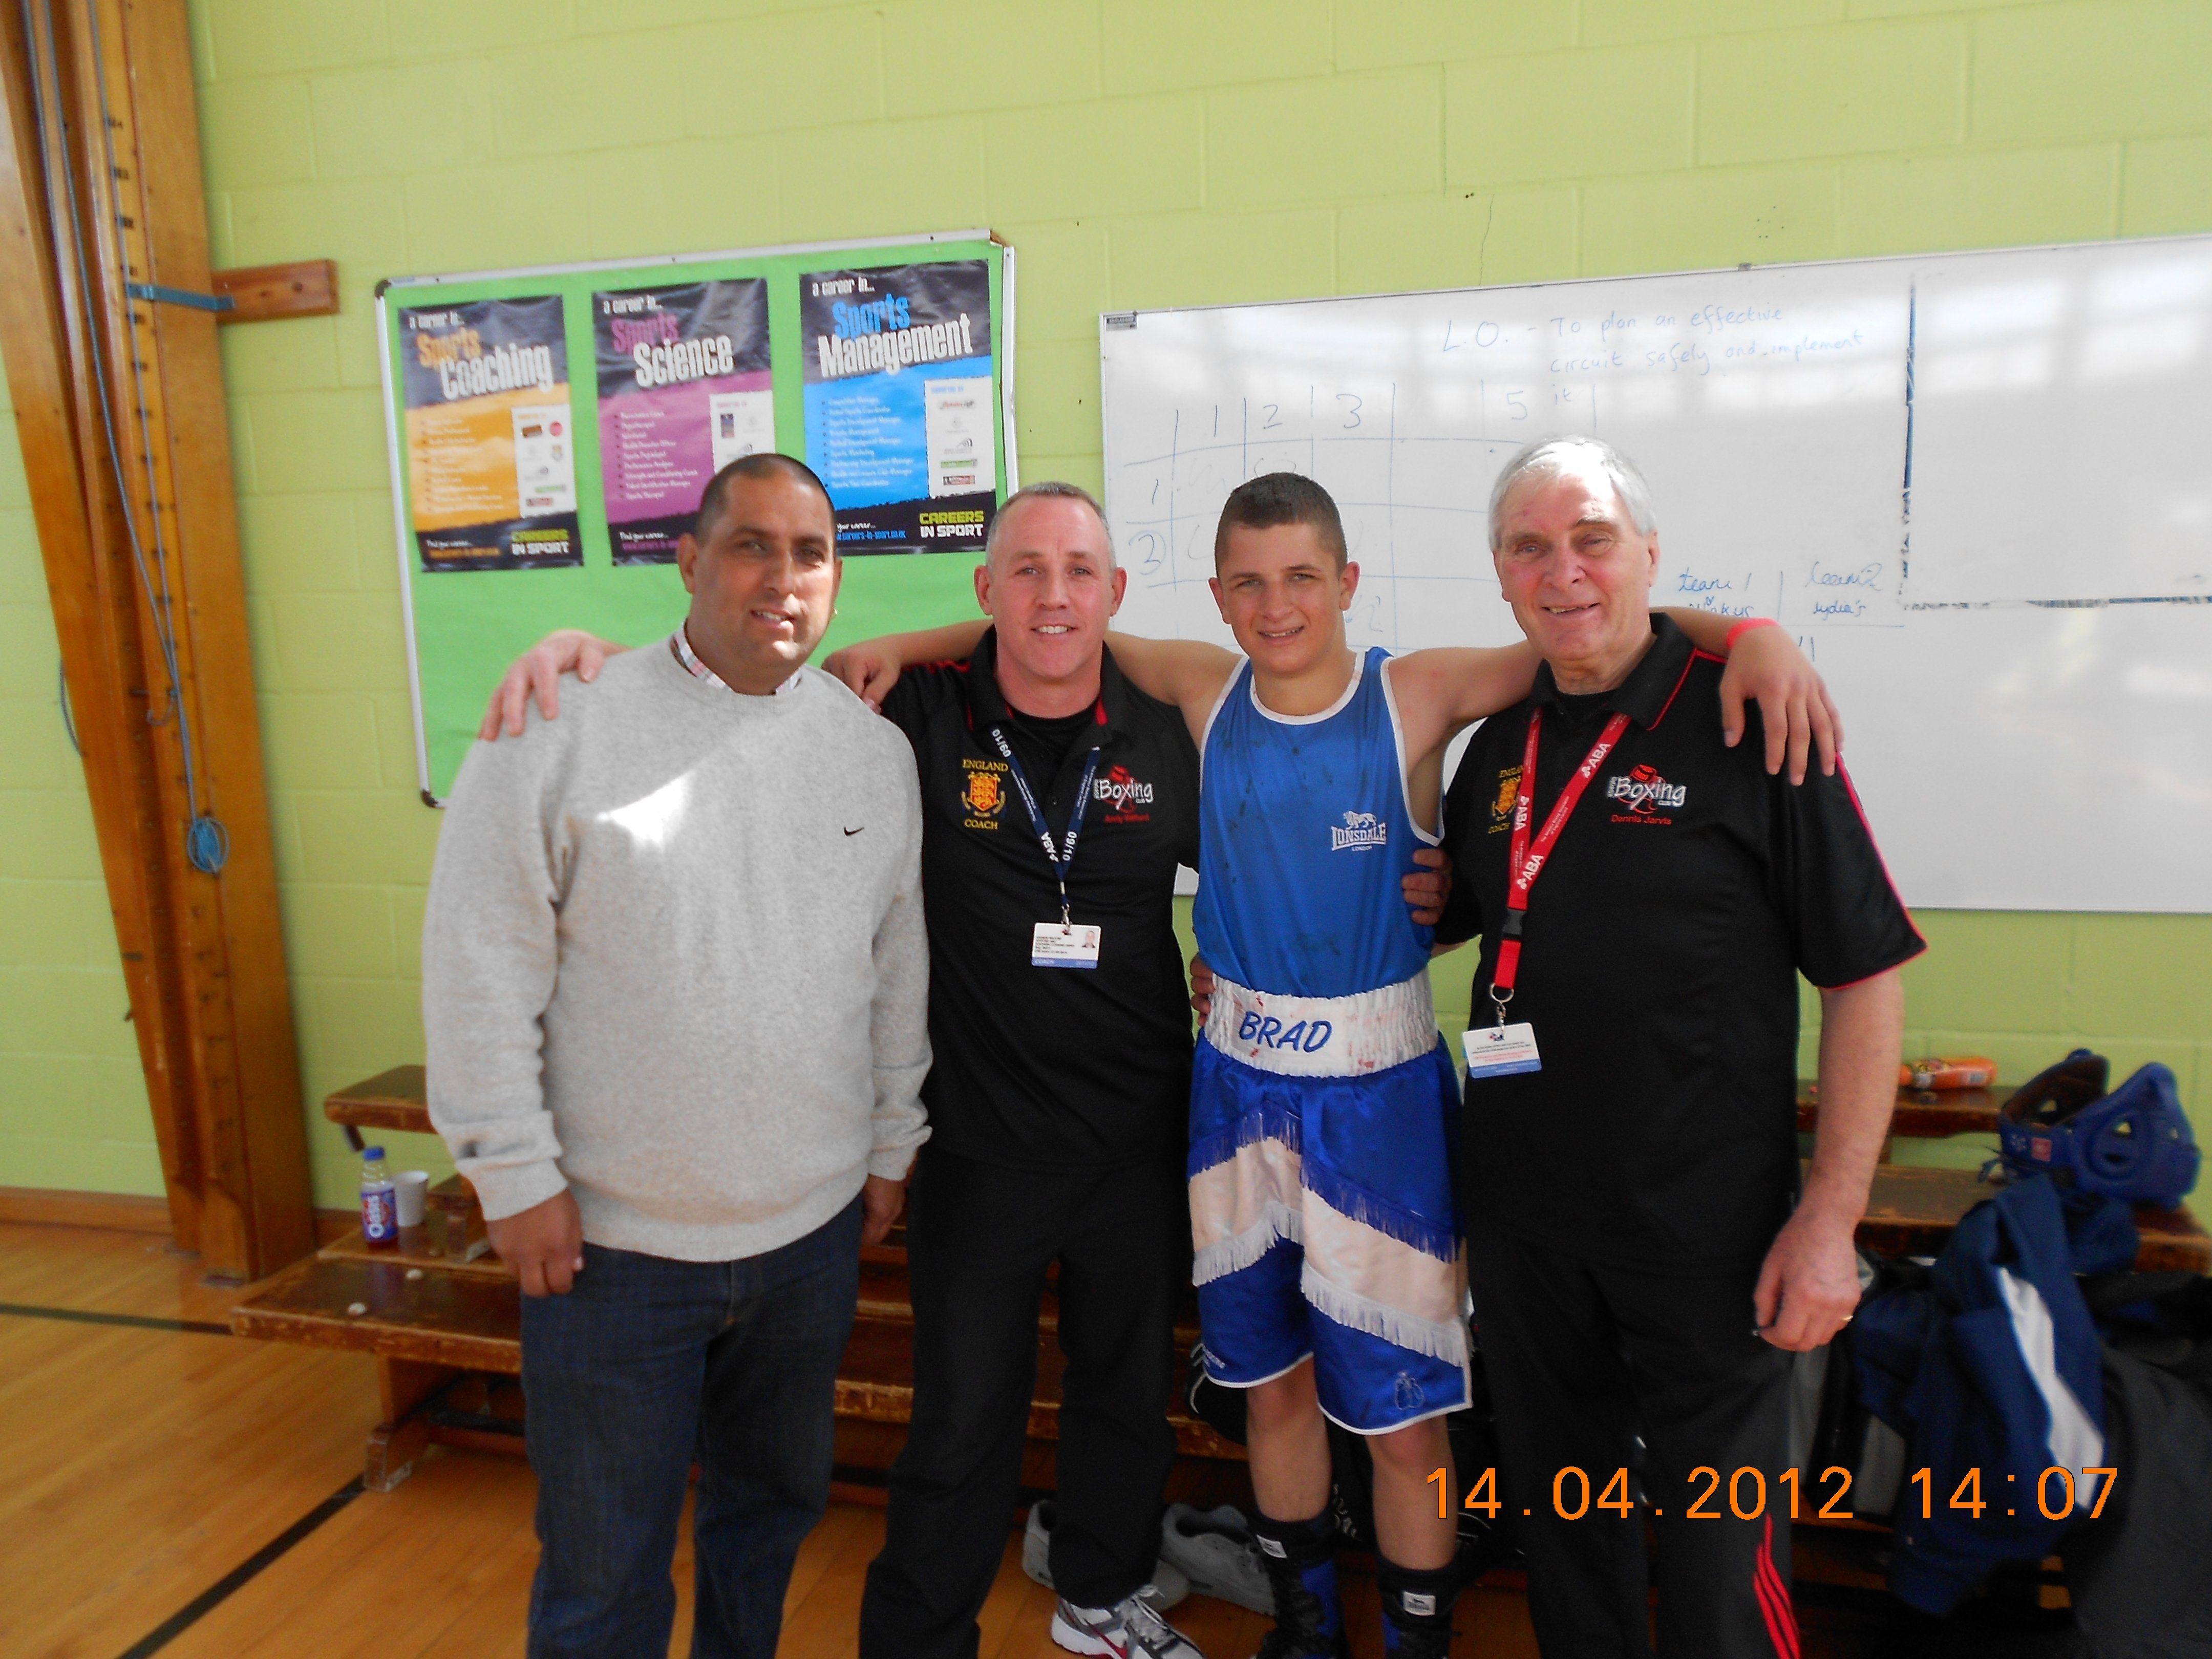 Ashford amateur boxing club